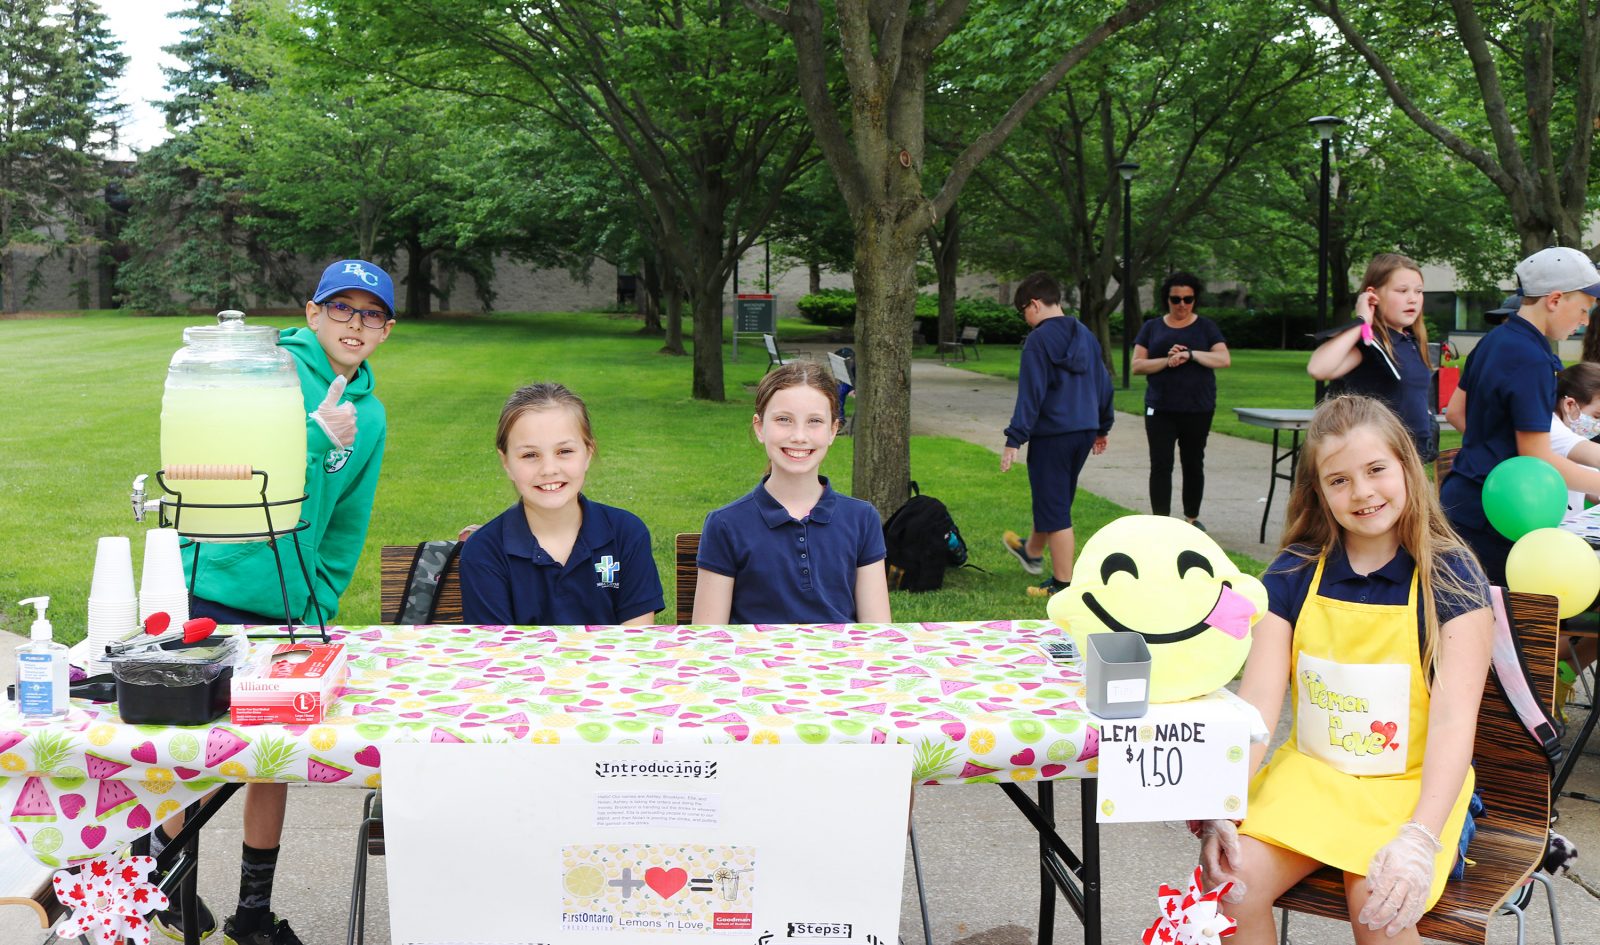 A group of elementary school students selling lemonade outside.